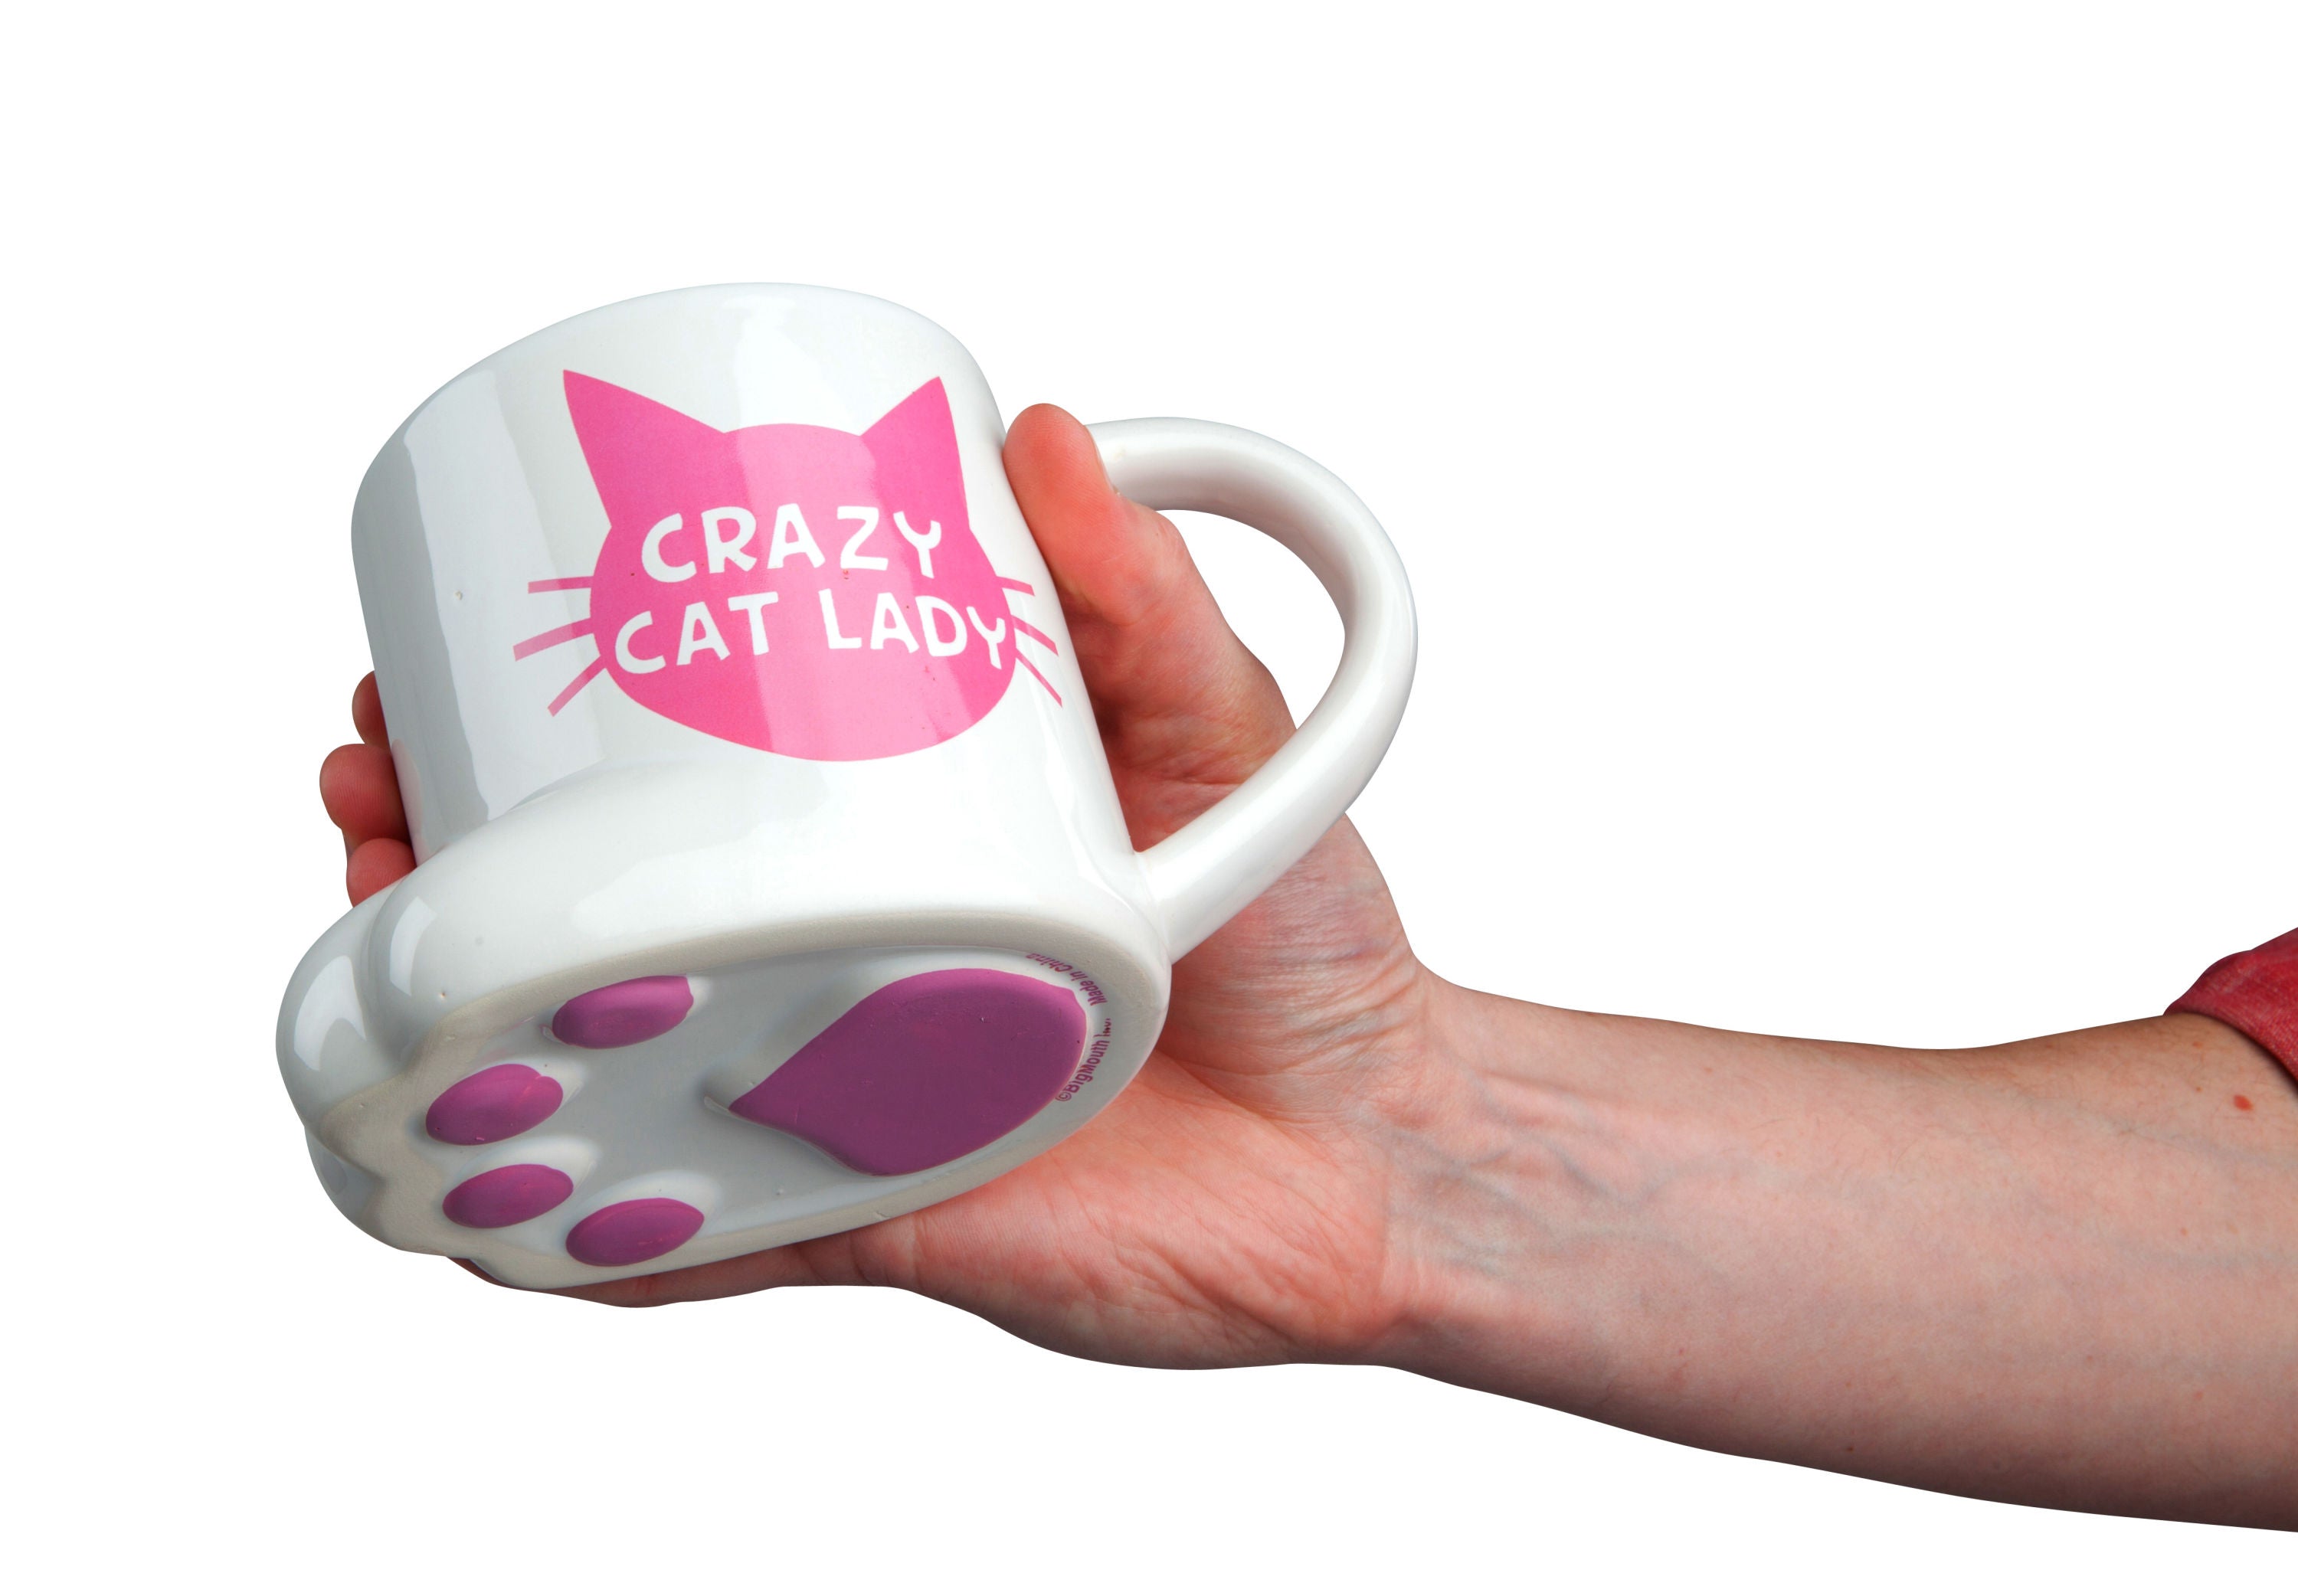 Crazy Cat Lady Coffee Mug